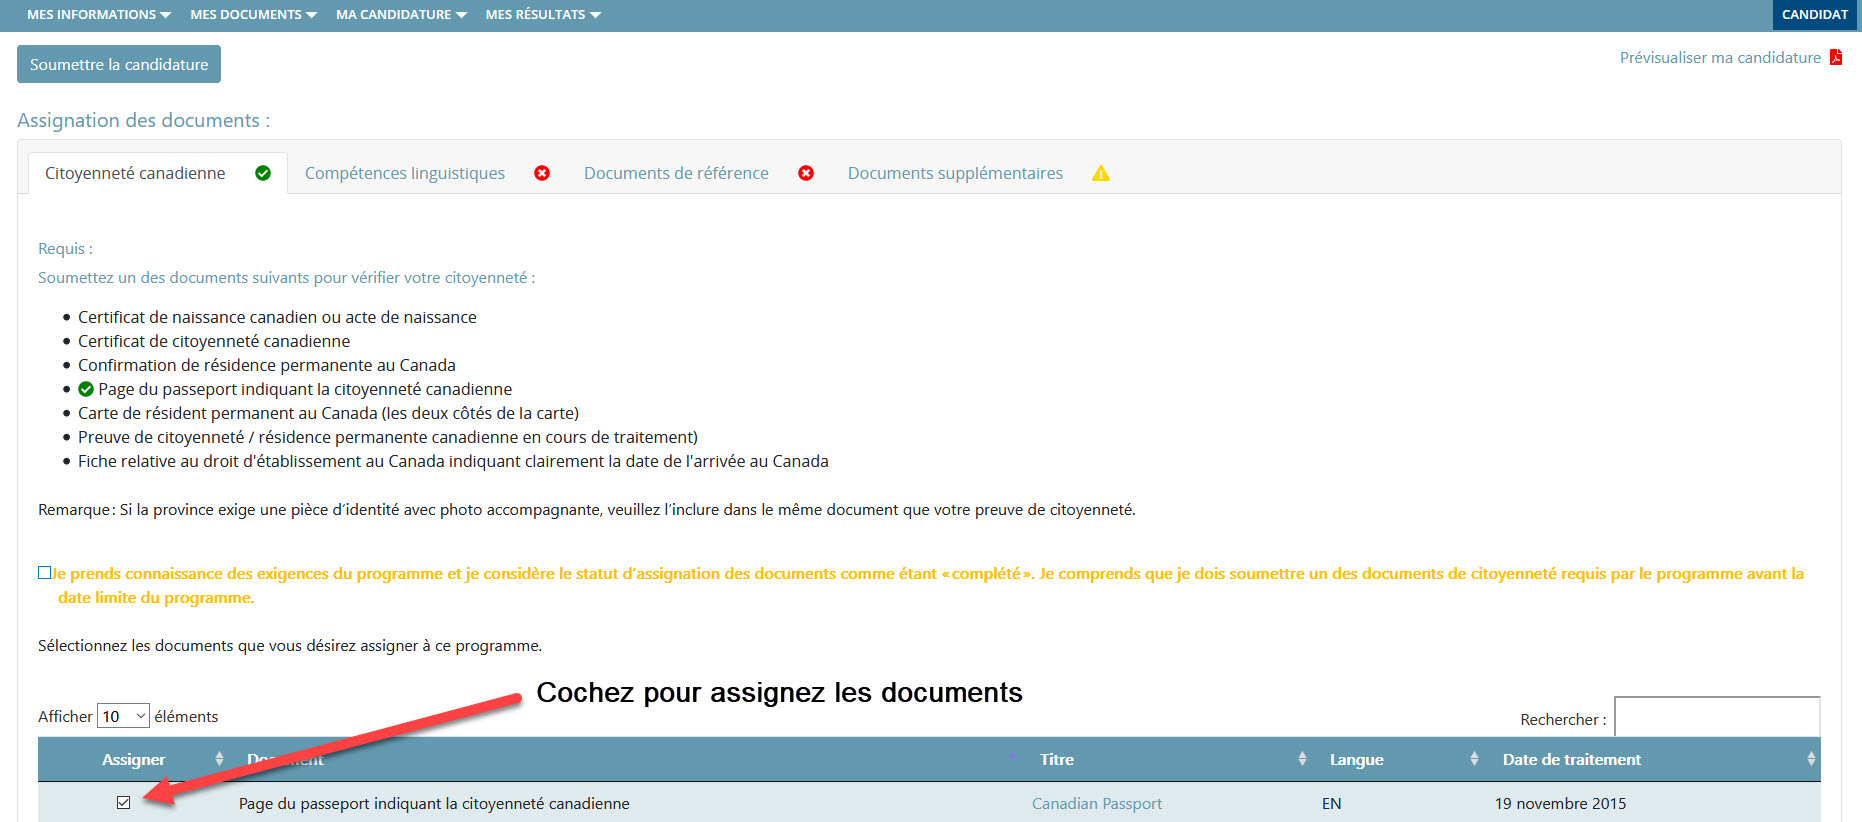 assign_document_checkbox-FR.jpg